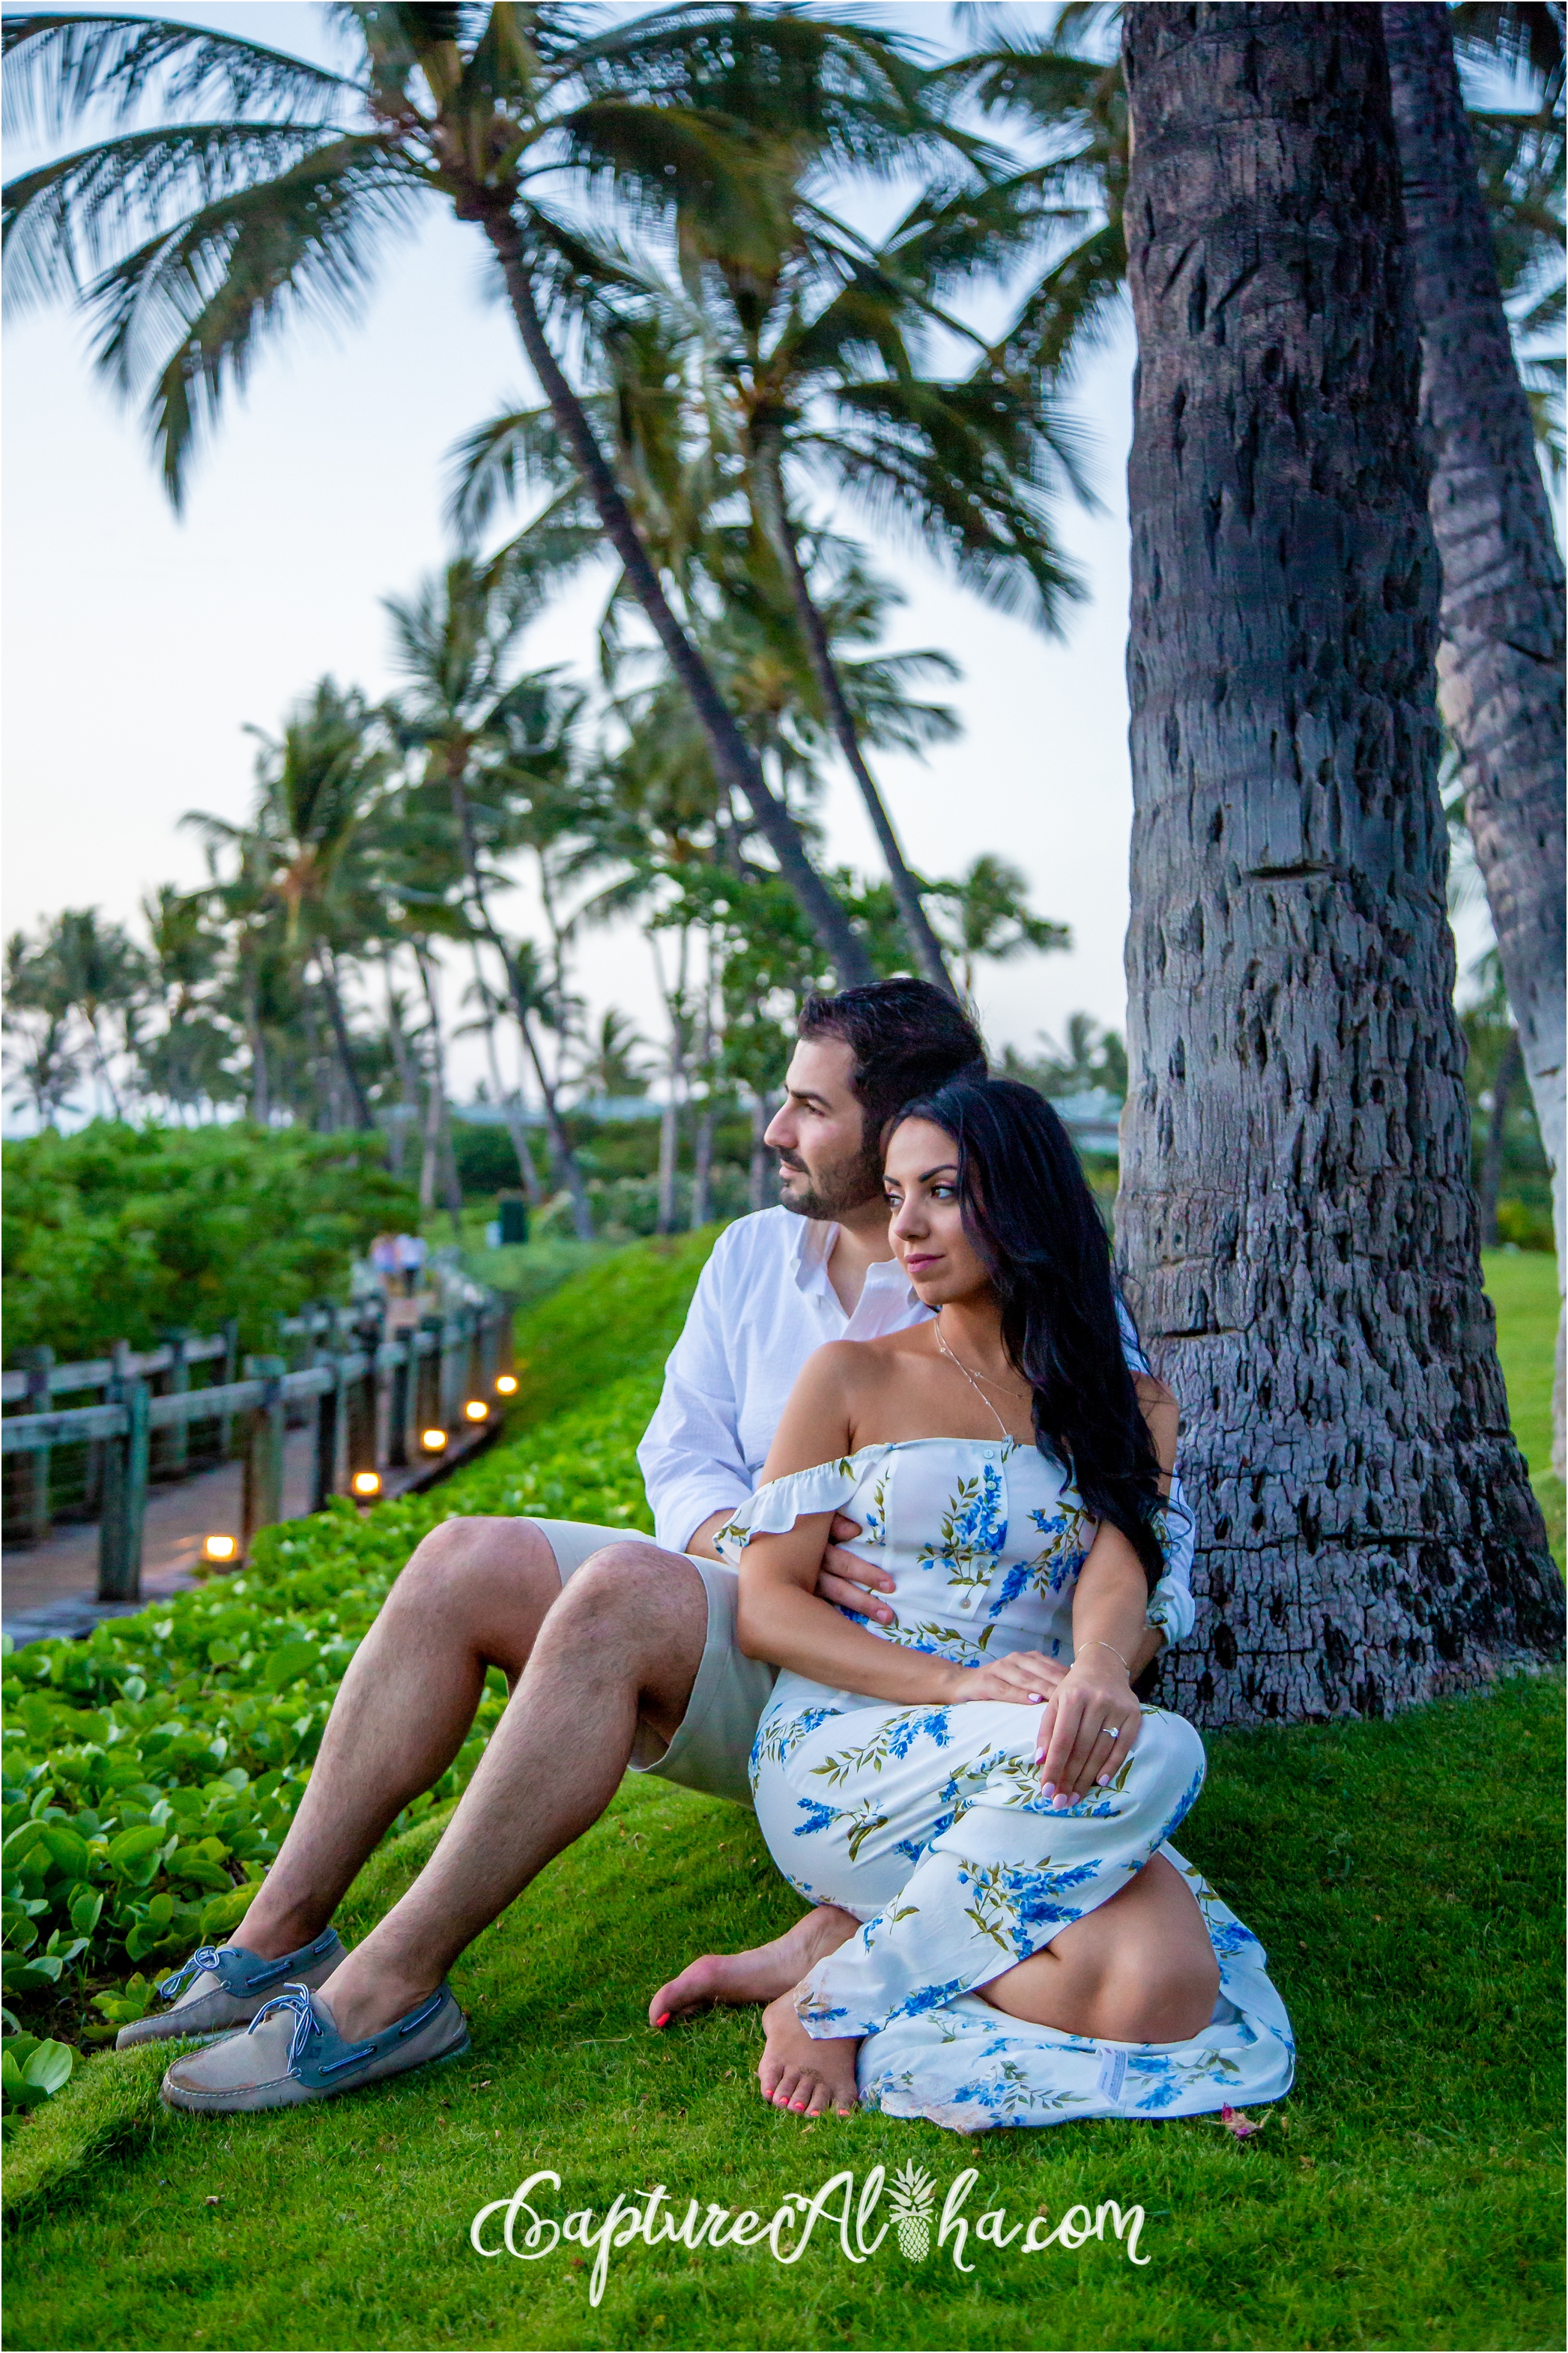 Maui Engagement Photographer capturing a surprise proposal at Mokapu Beach in Maui